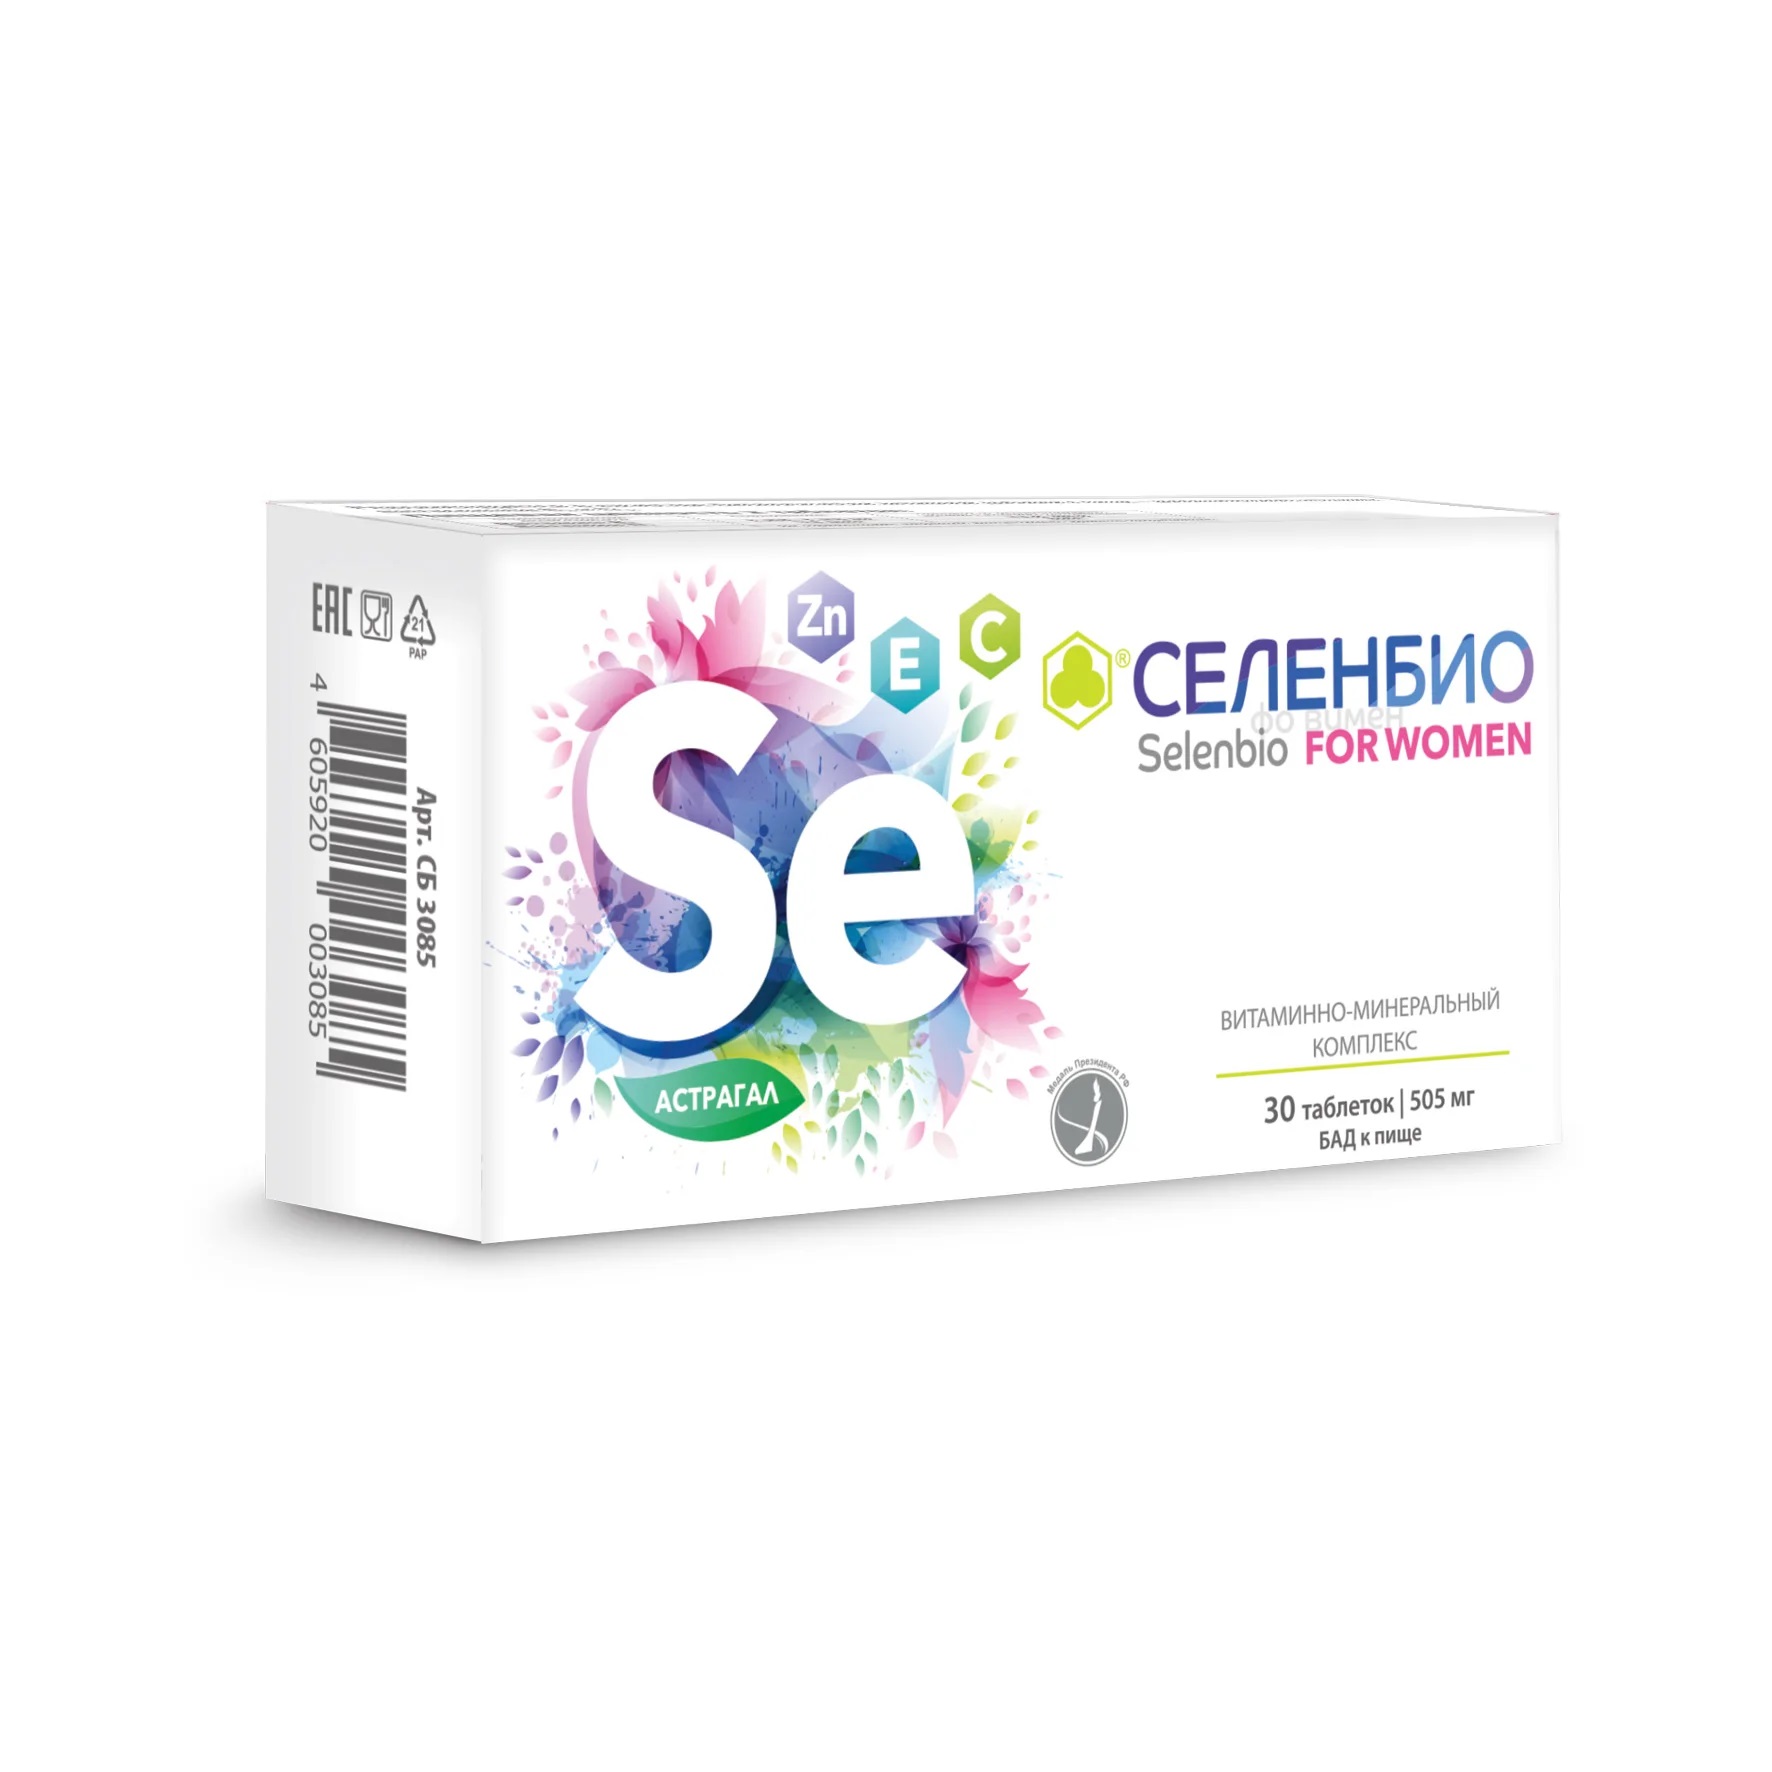 Селенбио for women, таблетки 505 мг, 30 шт. women photographers